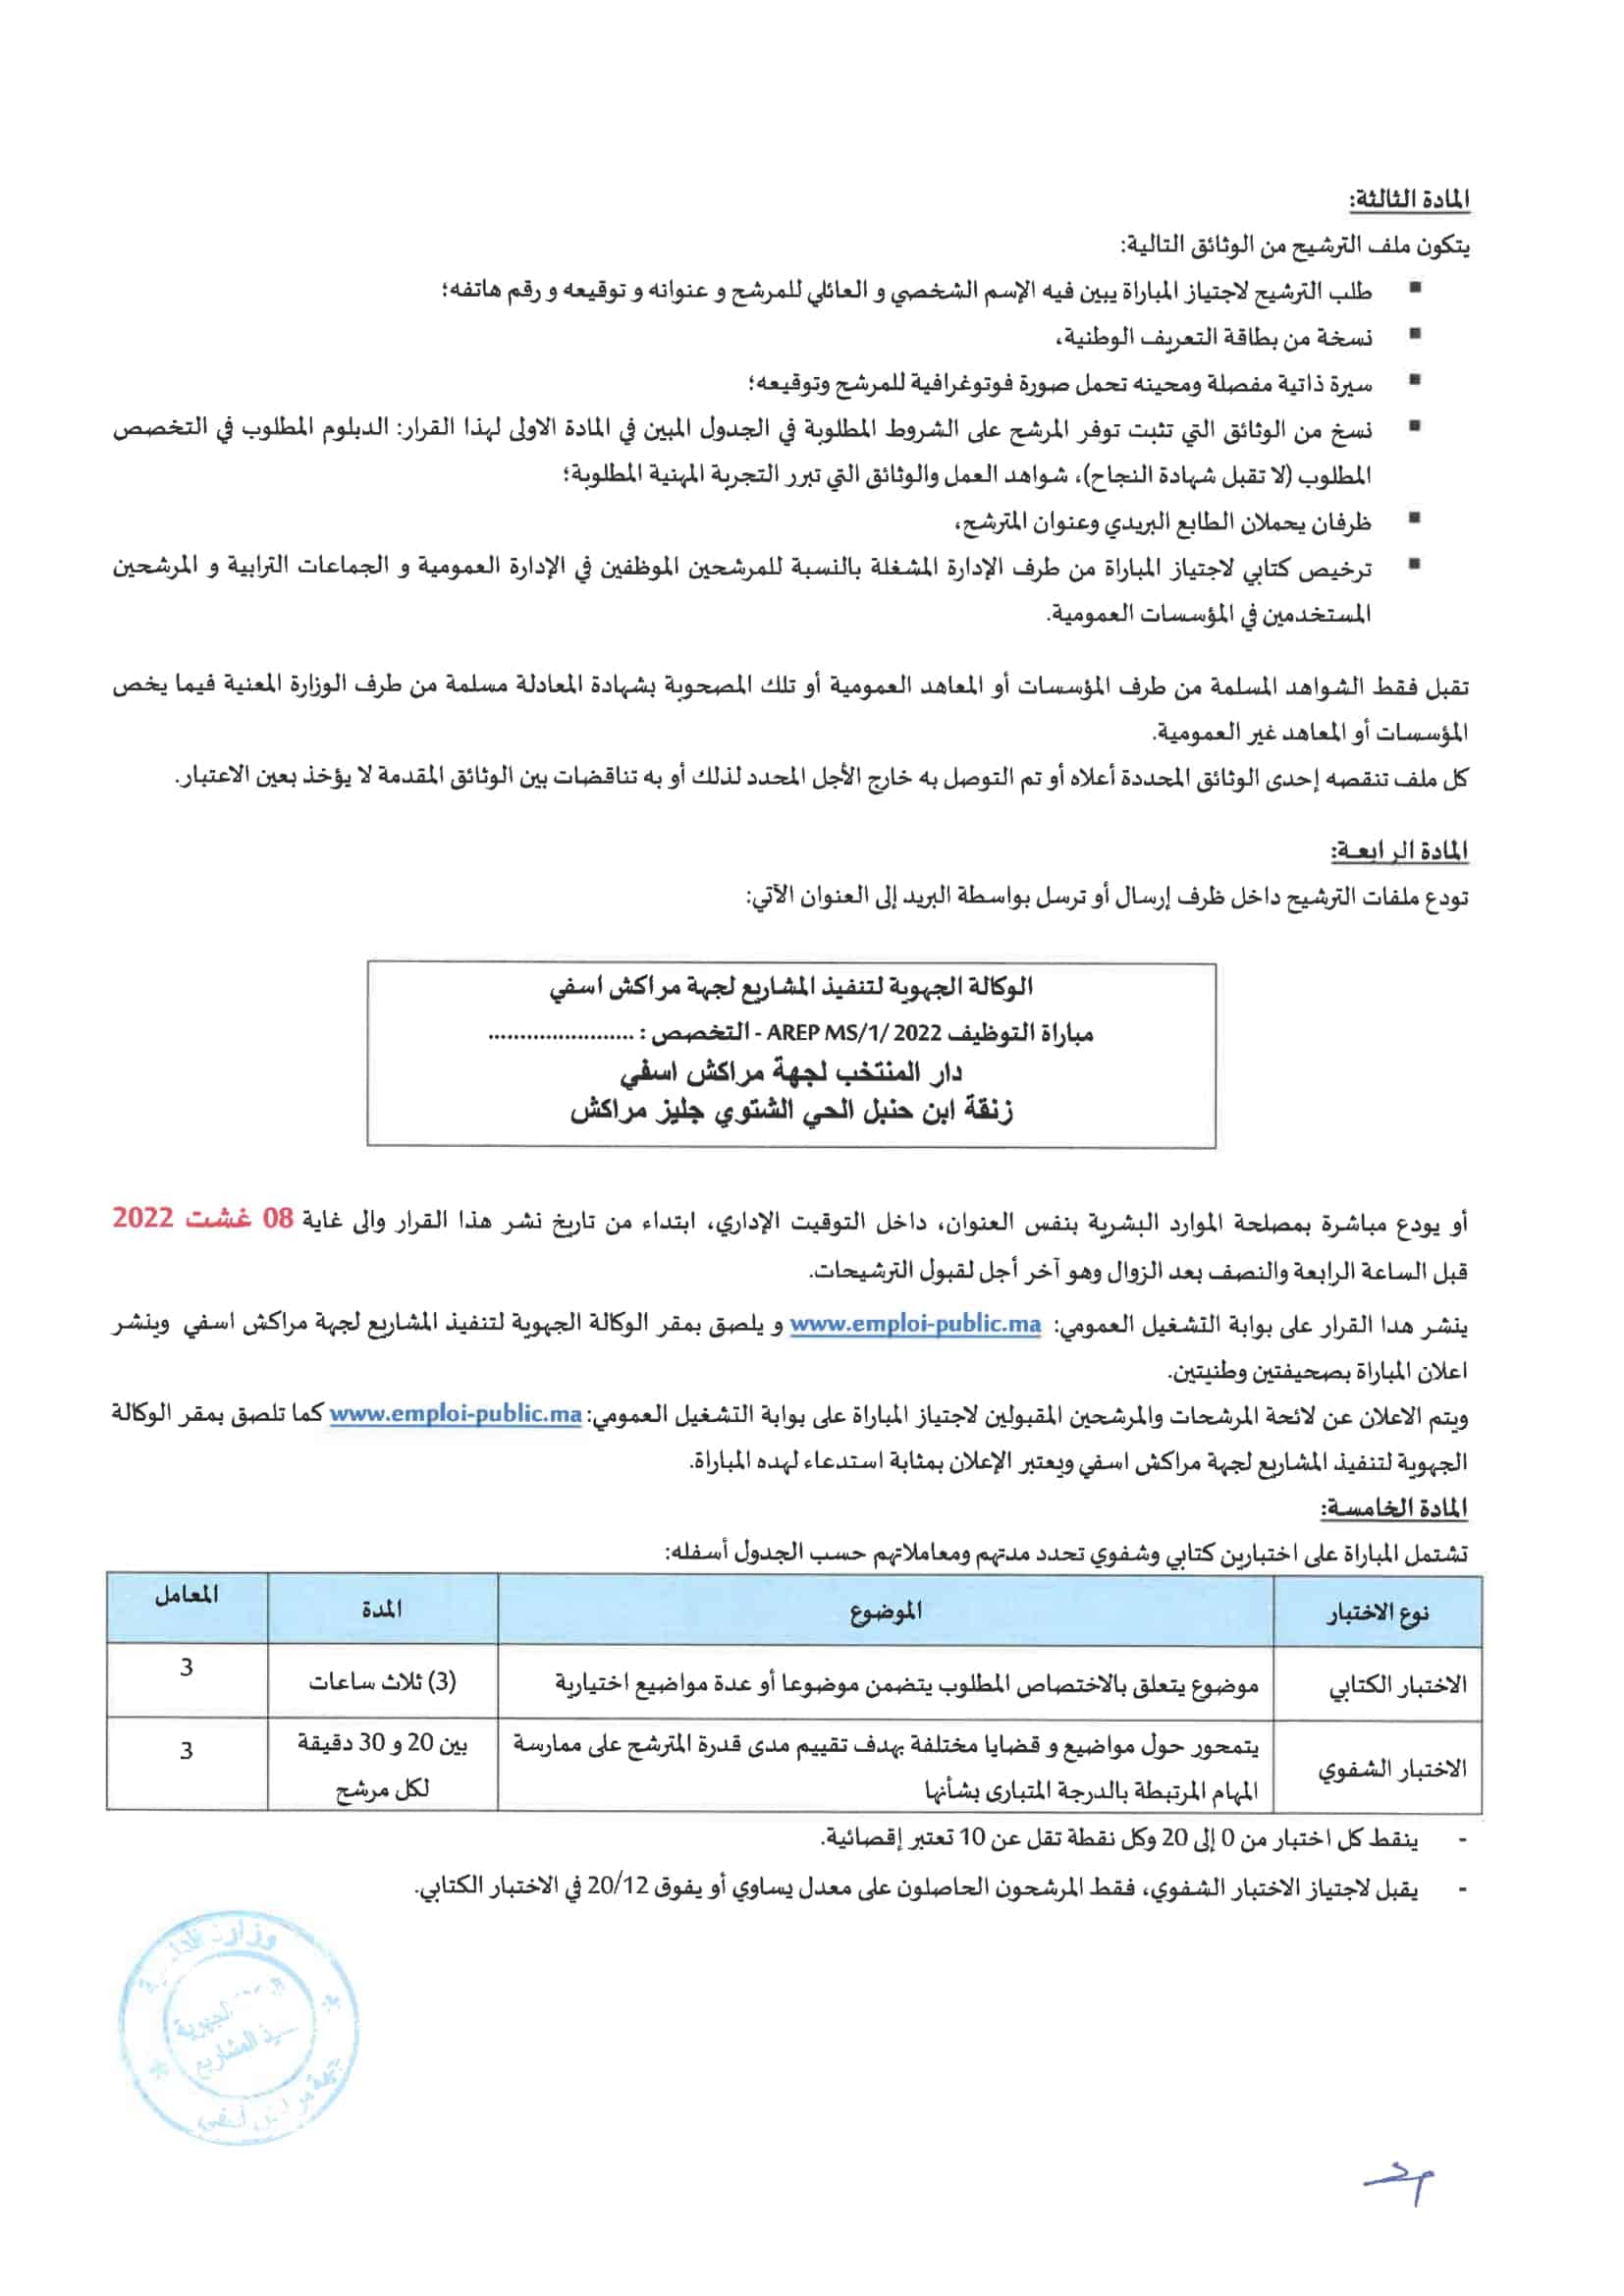 DcisionrecrutementstatutairesAR 1 4 Concours AREP Marrakech Safi 2022 (16 Postes)